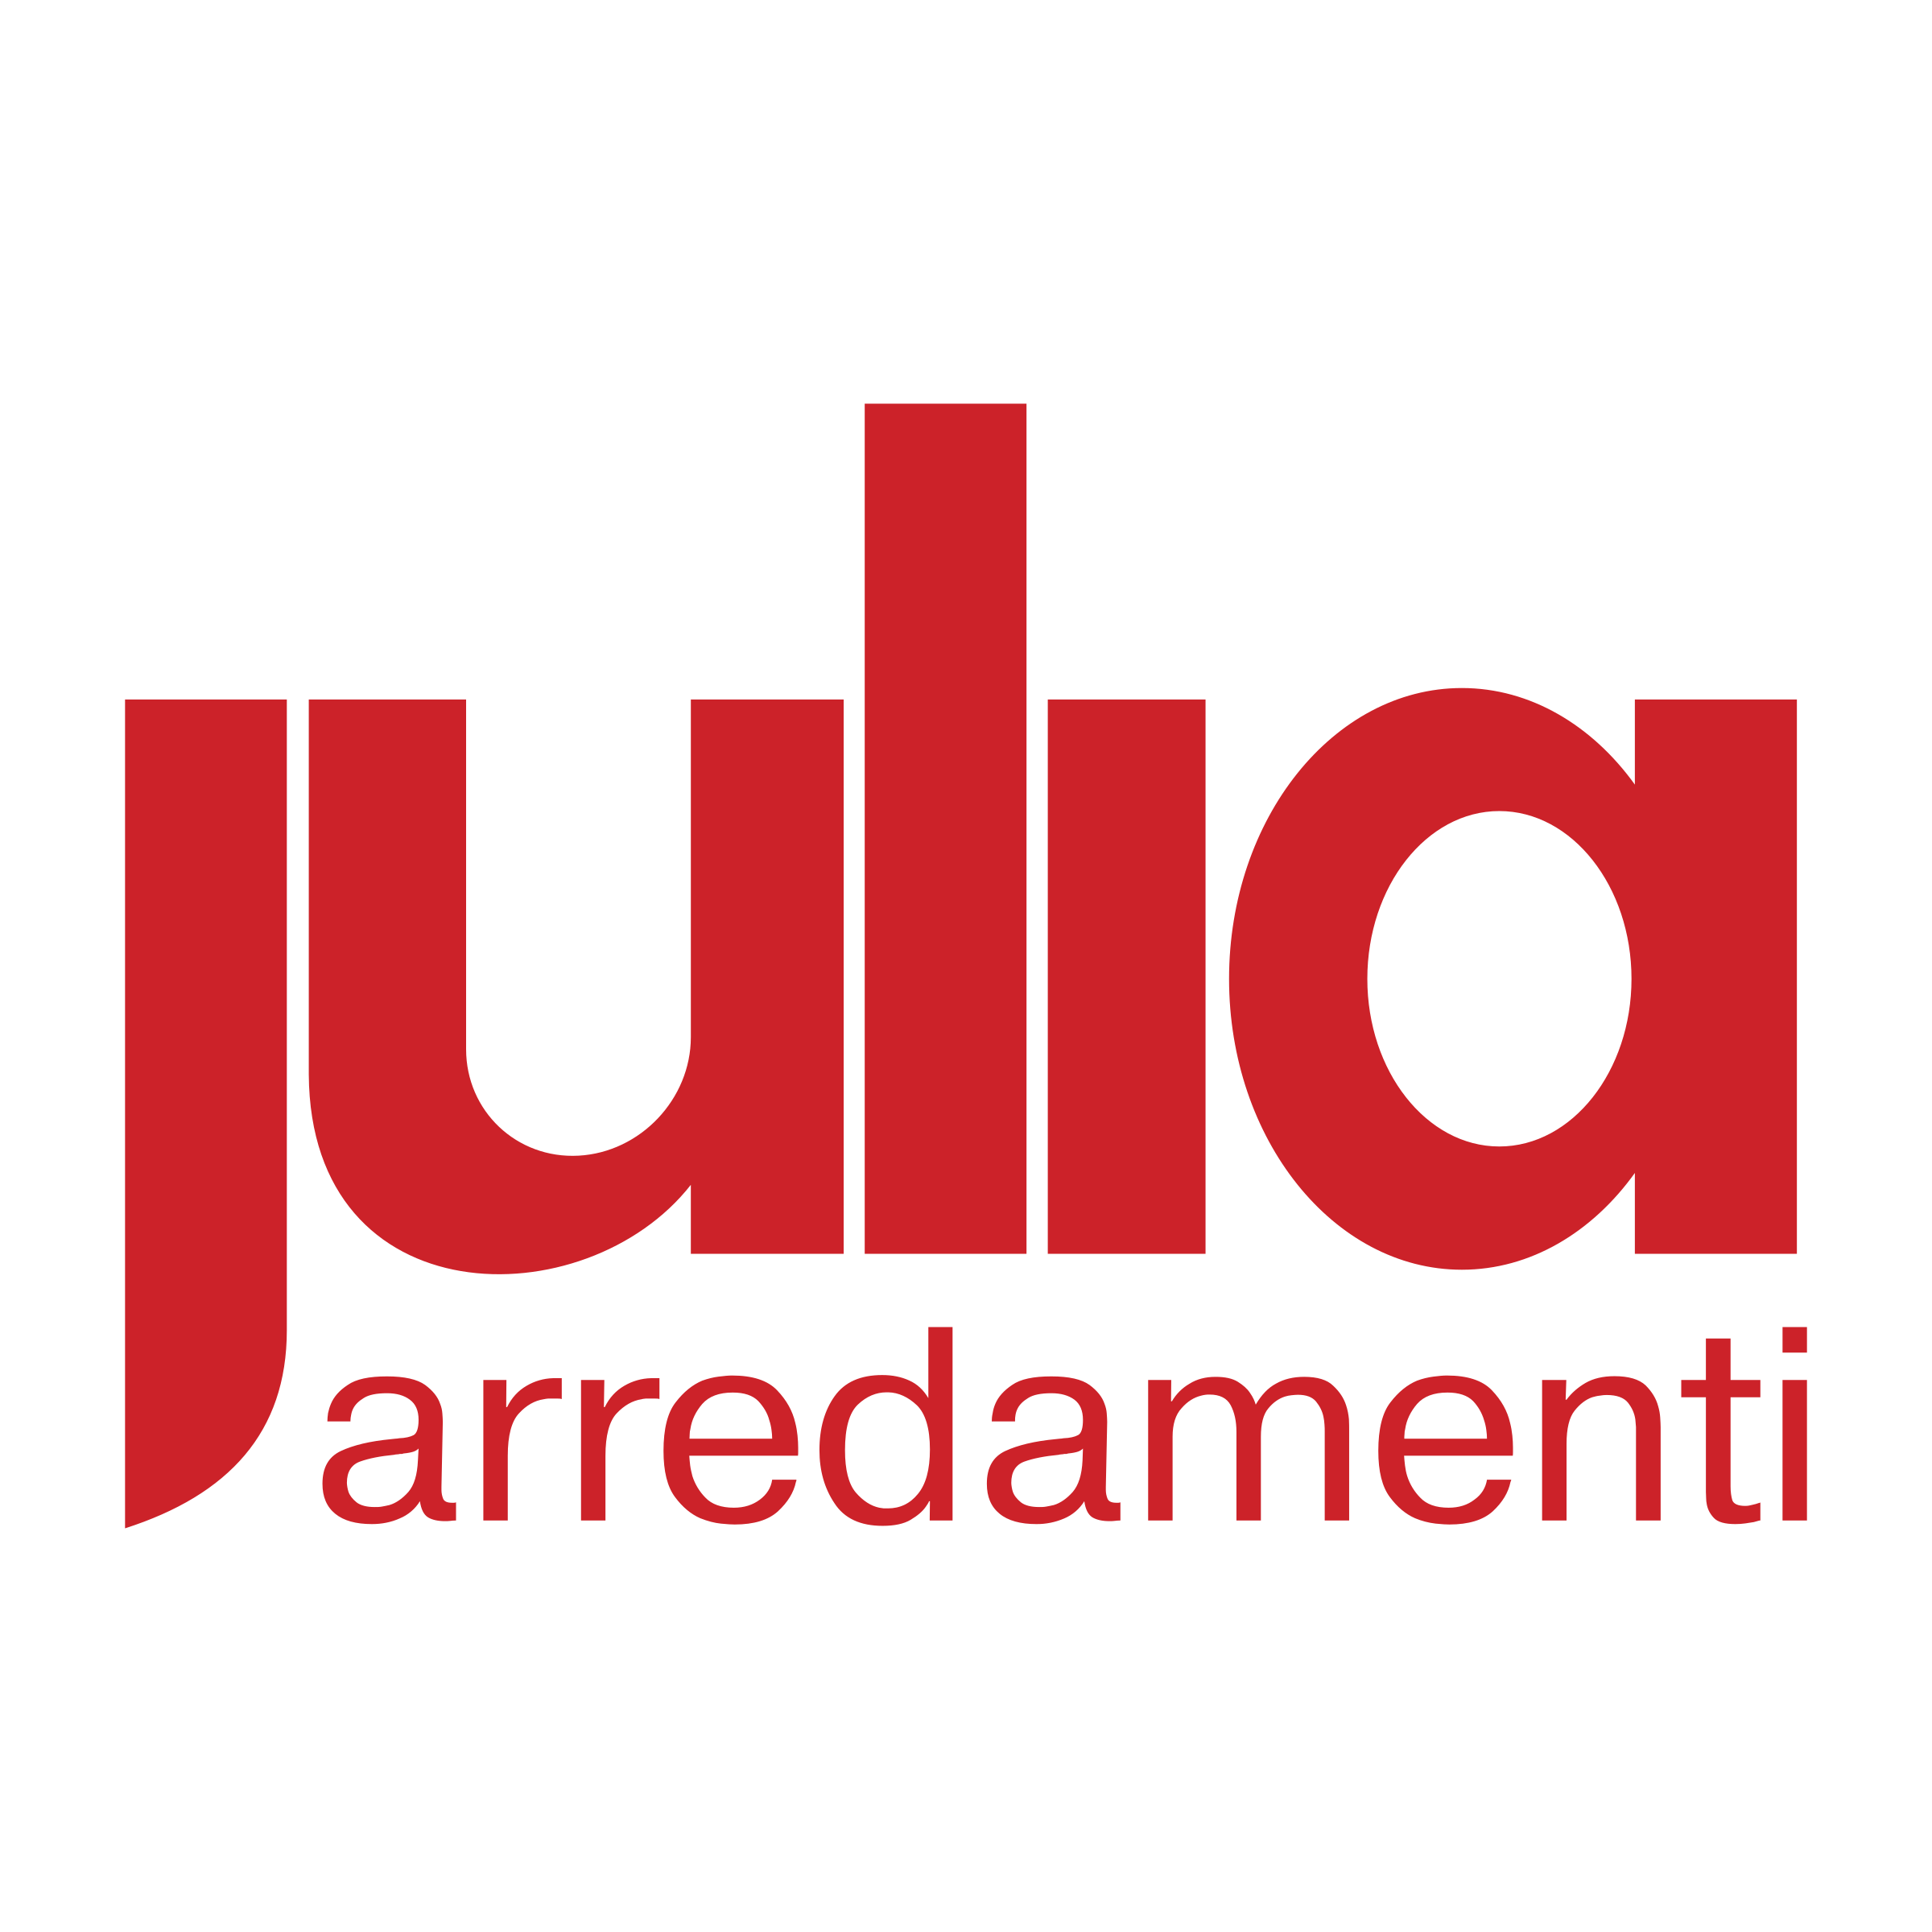 Julia Logo - Julia Logo PNG Transparent & SVG Vector - Freebie Supply